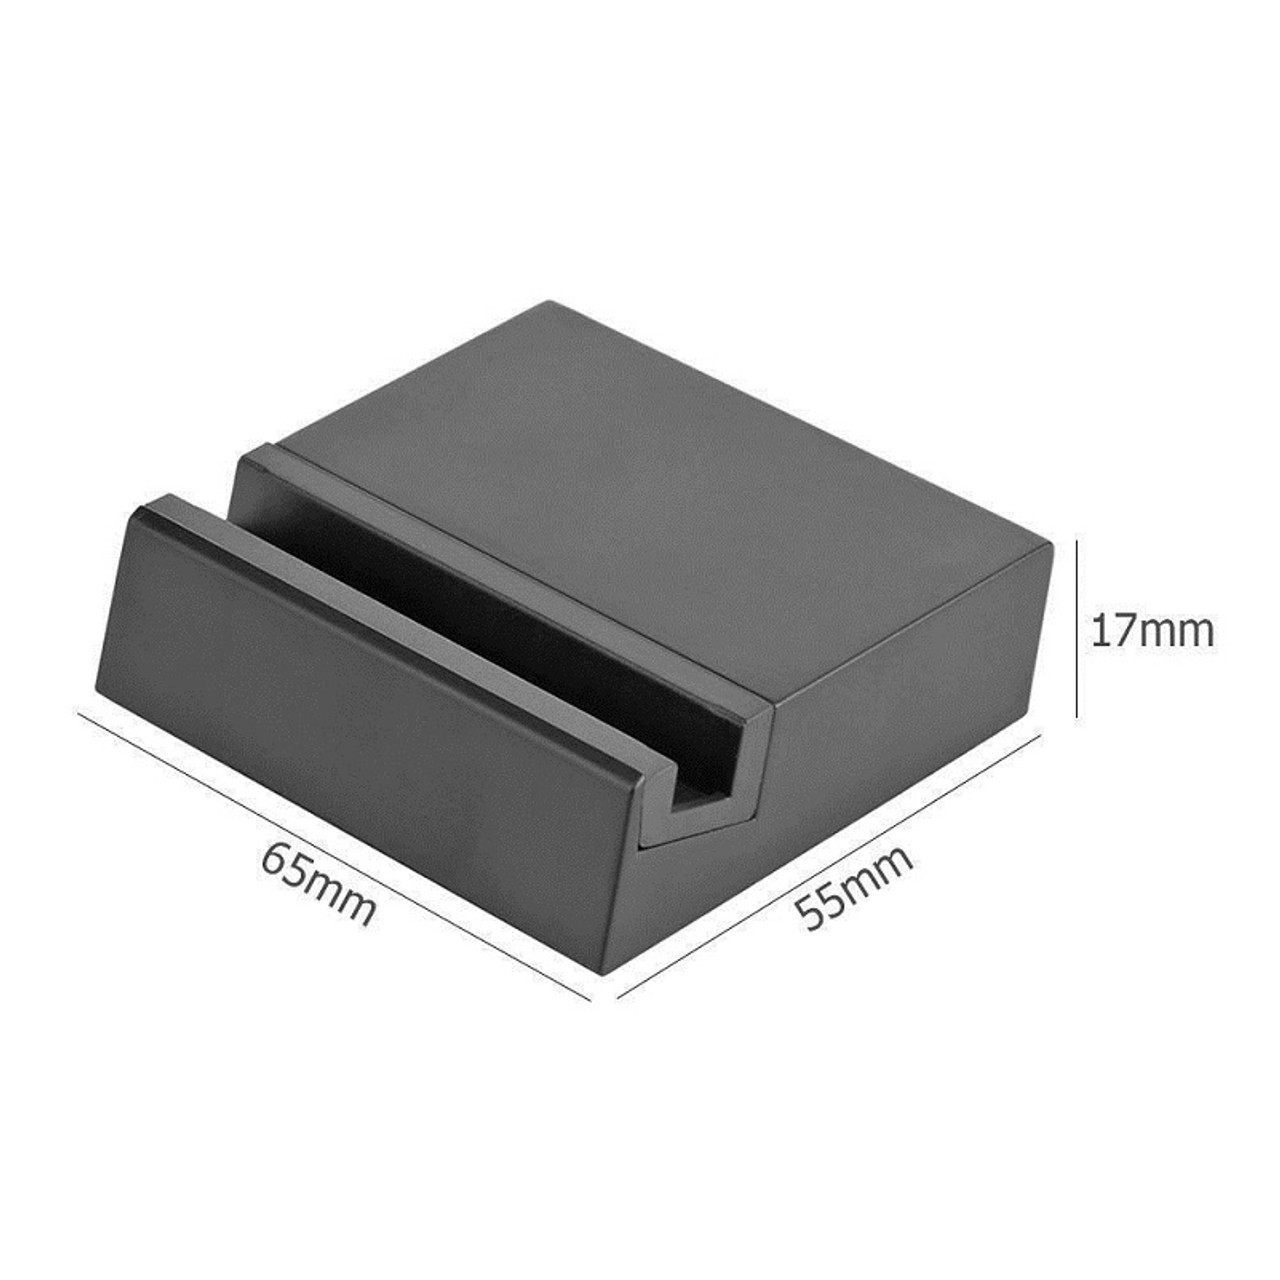 Magnetic Charging Dock Cradle Phone Holder Stand For Sony Xperia Z1 Z2 Z3 L50W L36HZ3 L39h C6902 C6903